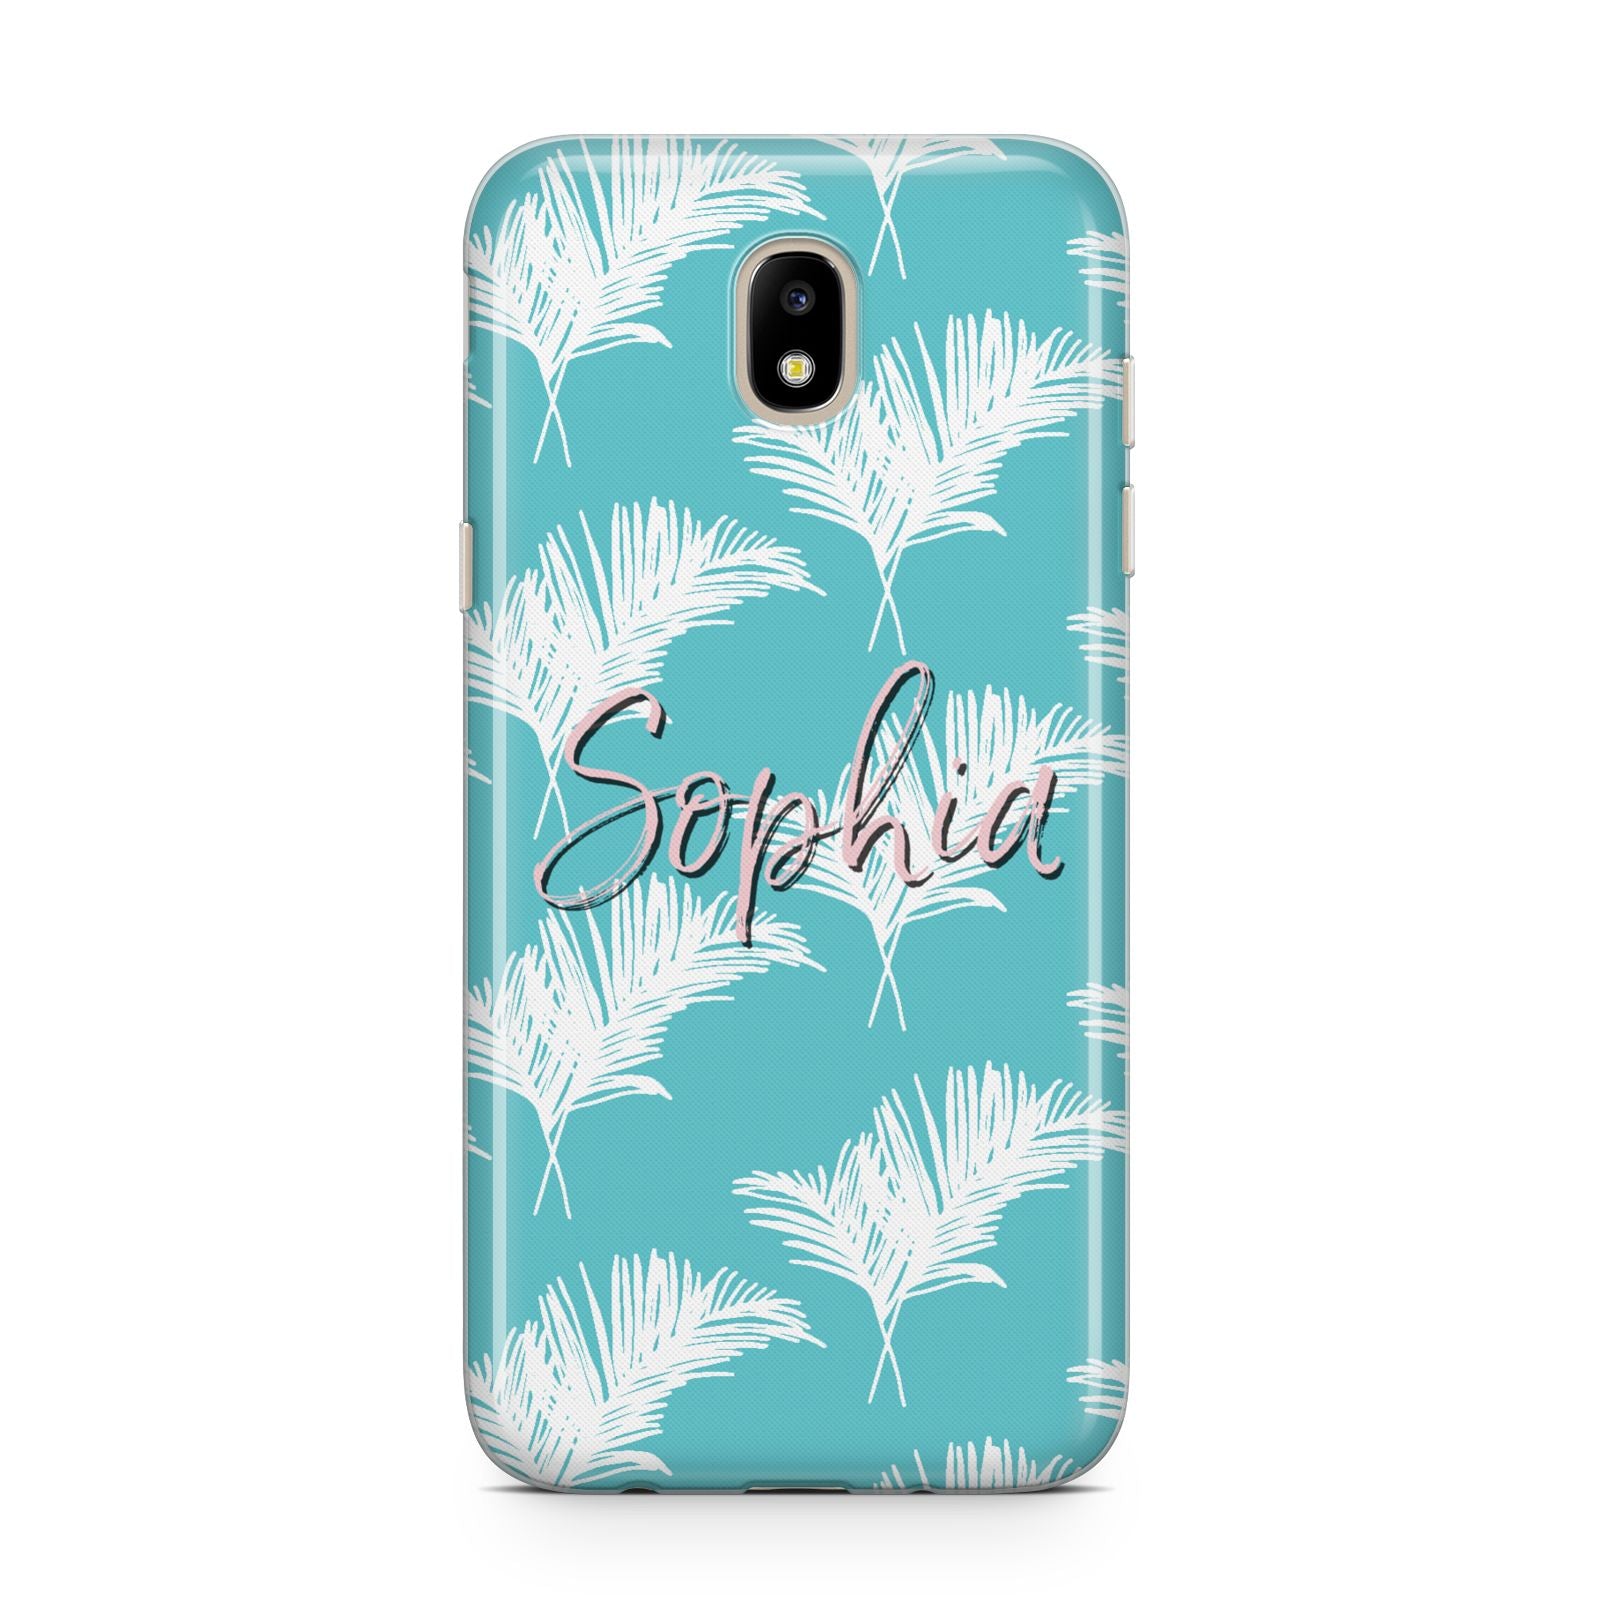 Personalised Blue White Tropical Foliage Samsung J5 2017 Case